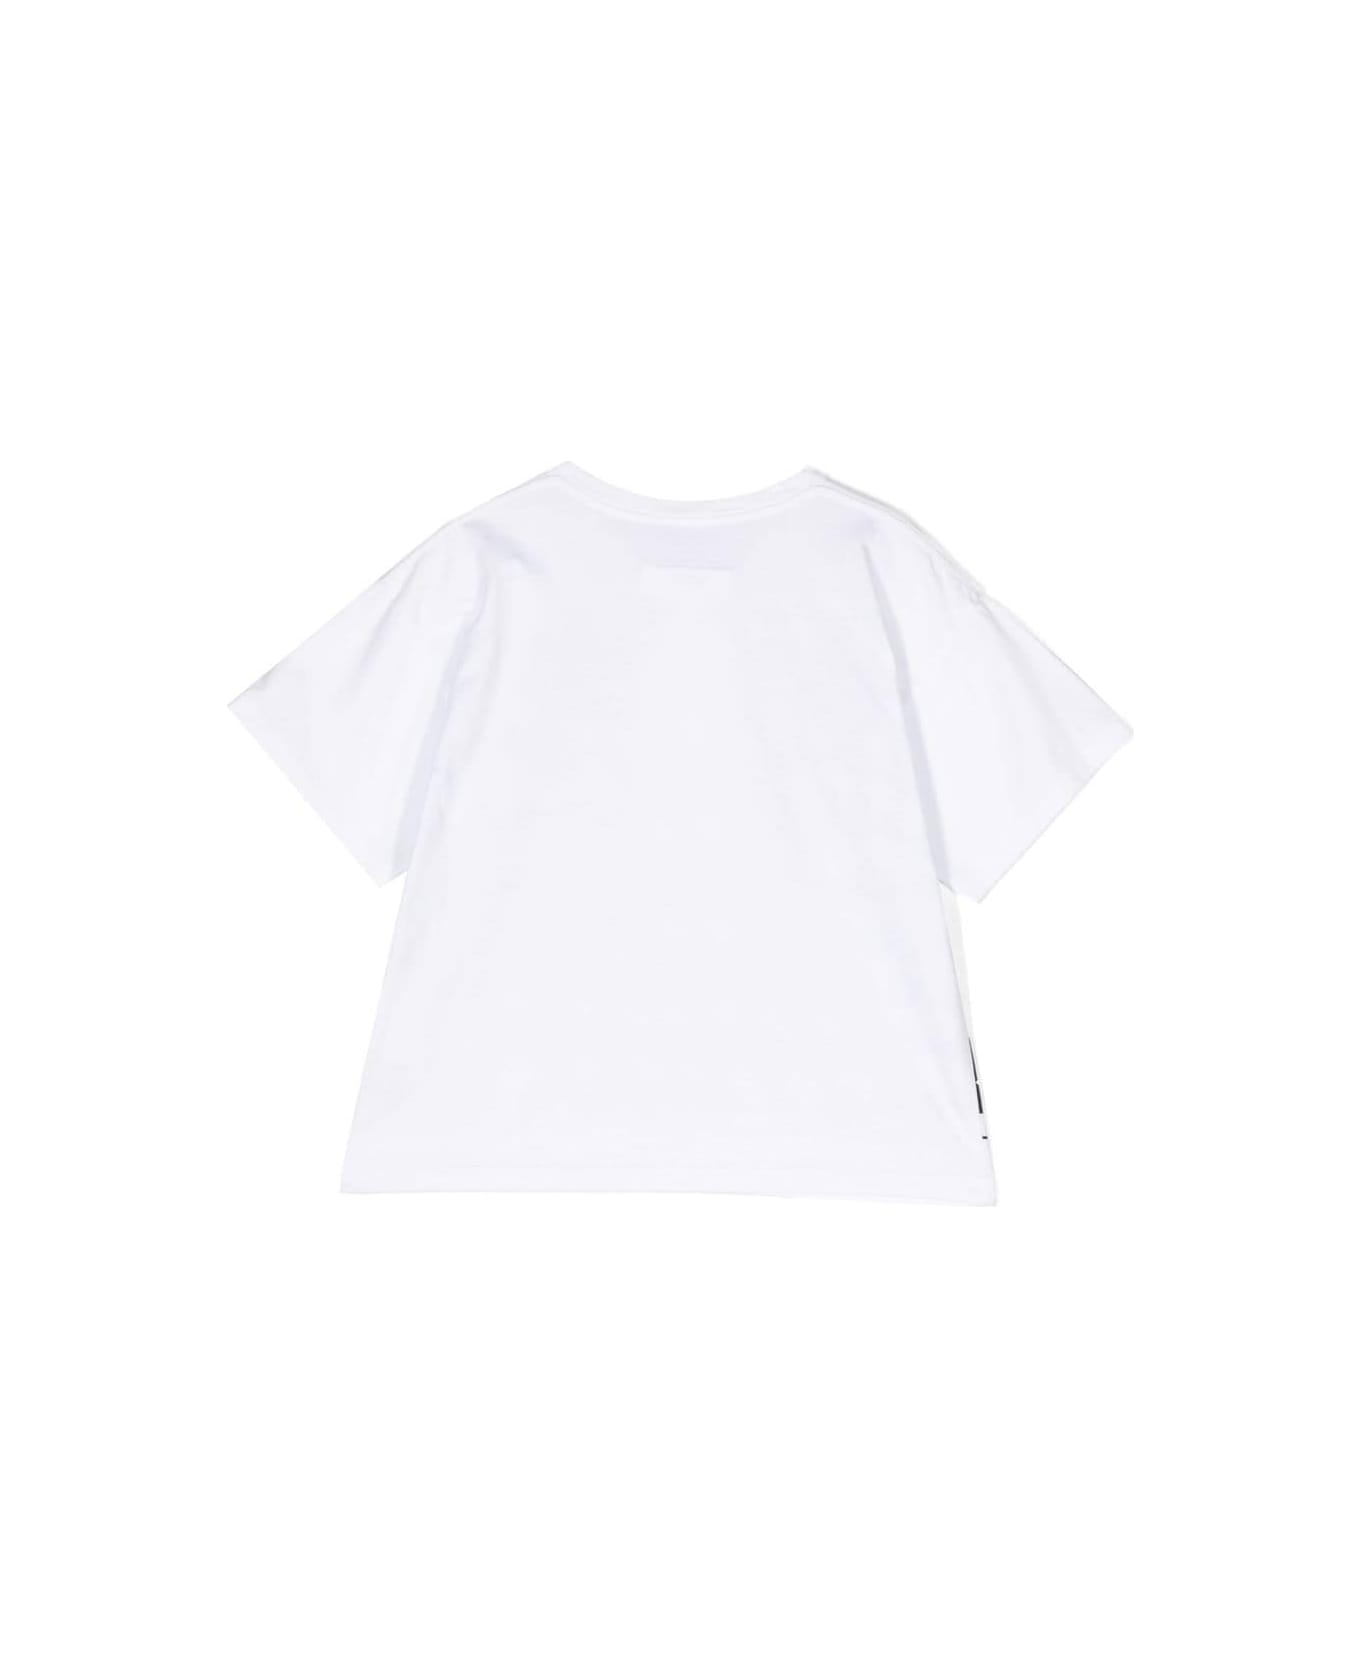 MM6 Maison Margiela Printed T-shirt - White